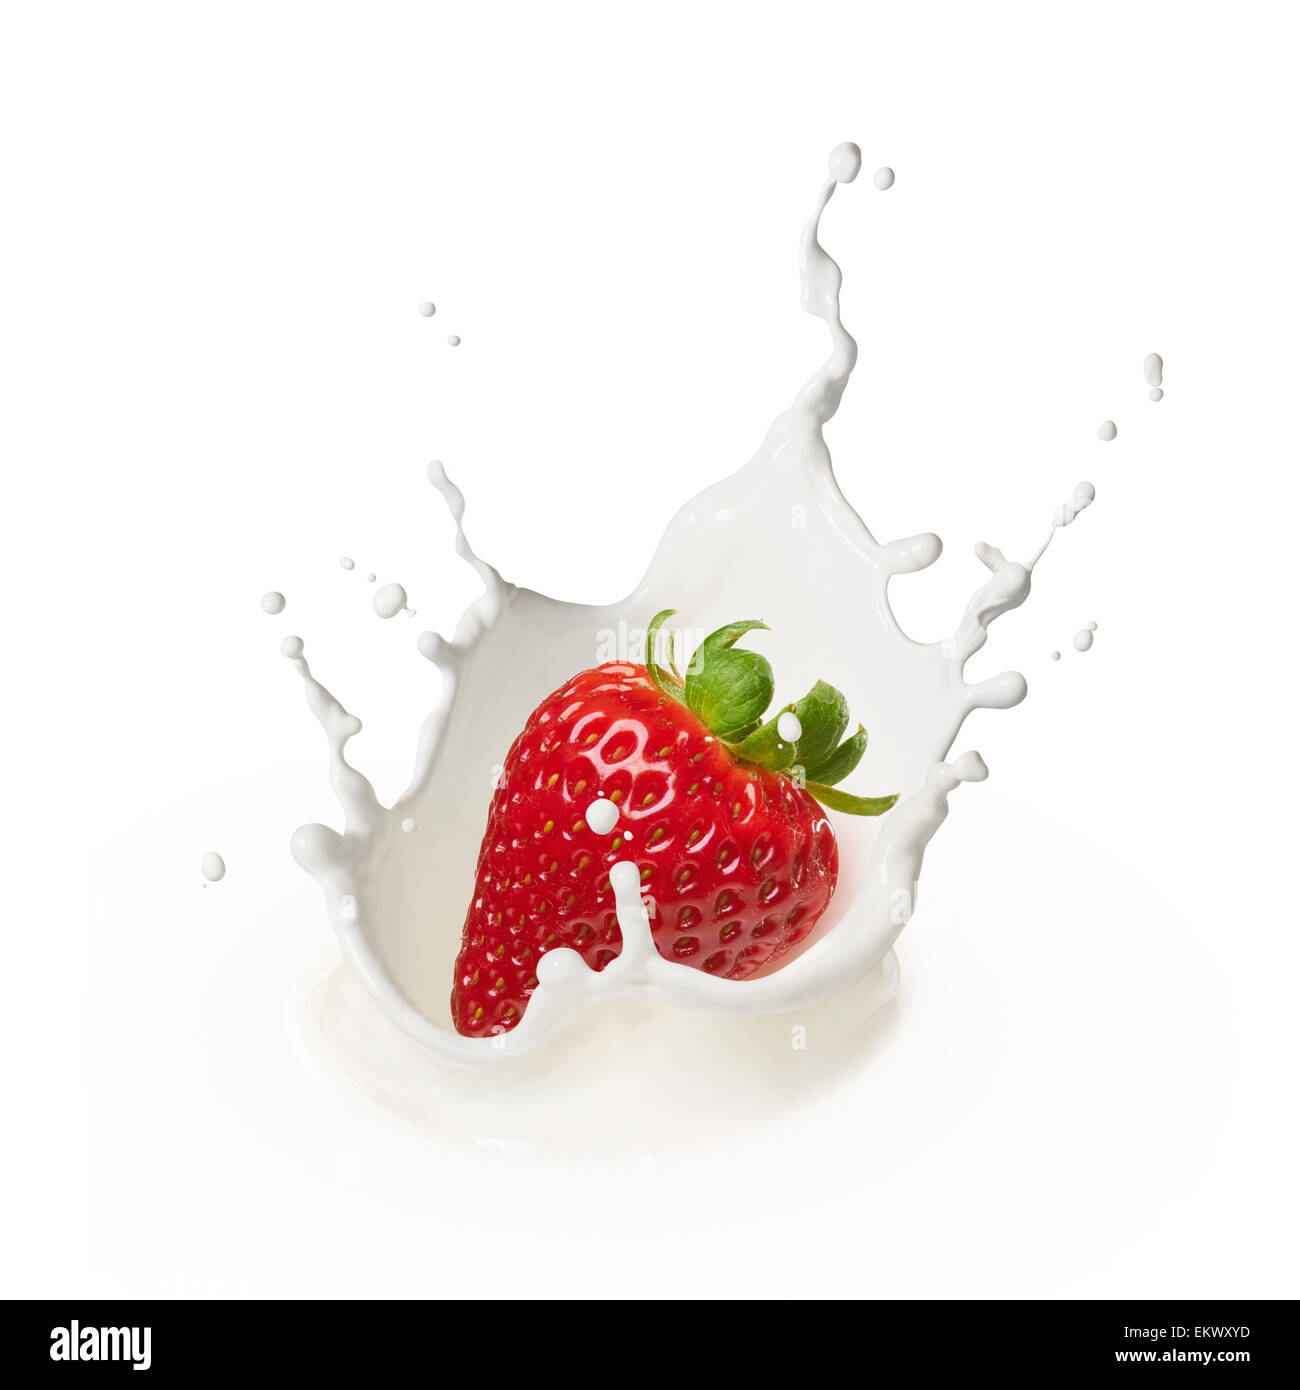 dropping a strawberry into milk causing splash Stock Photo